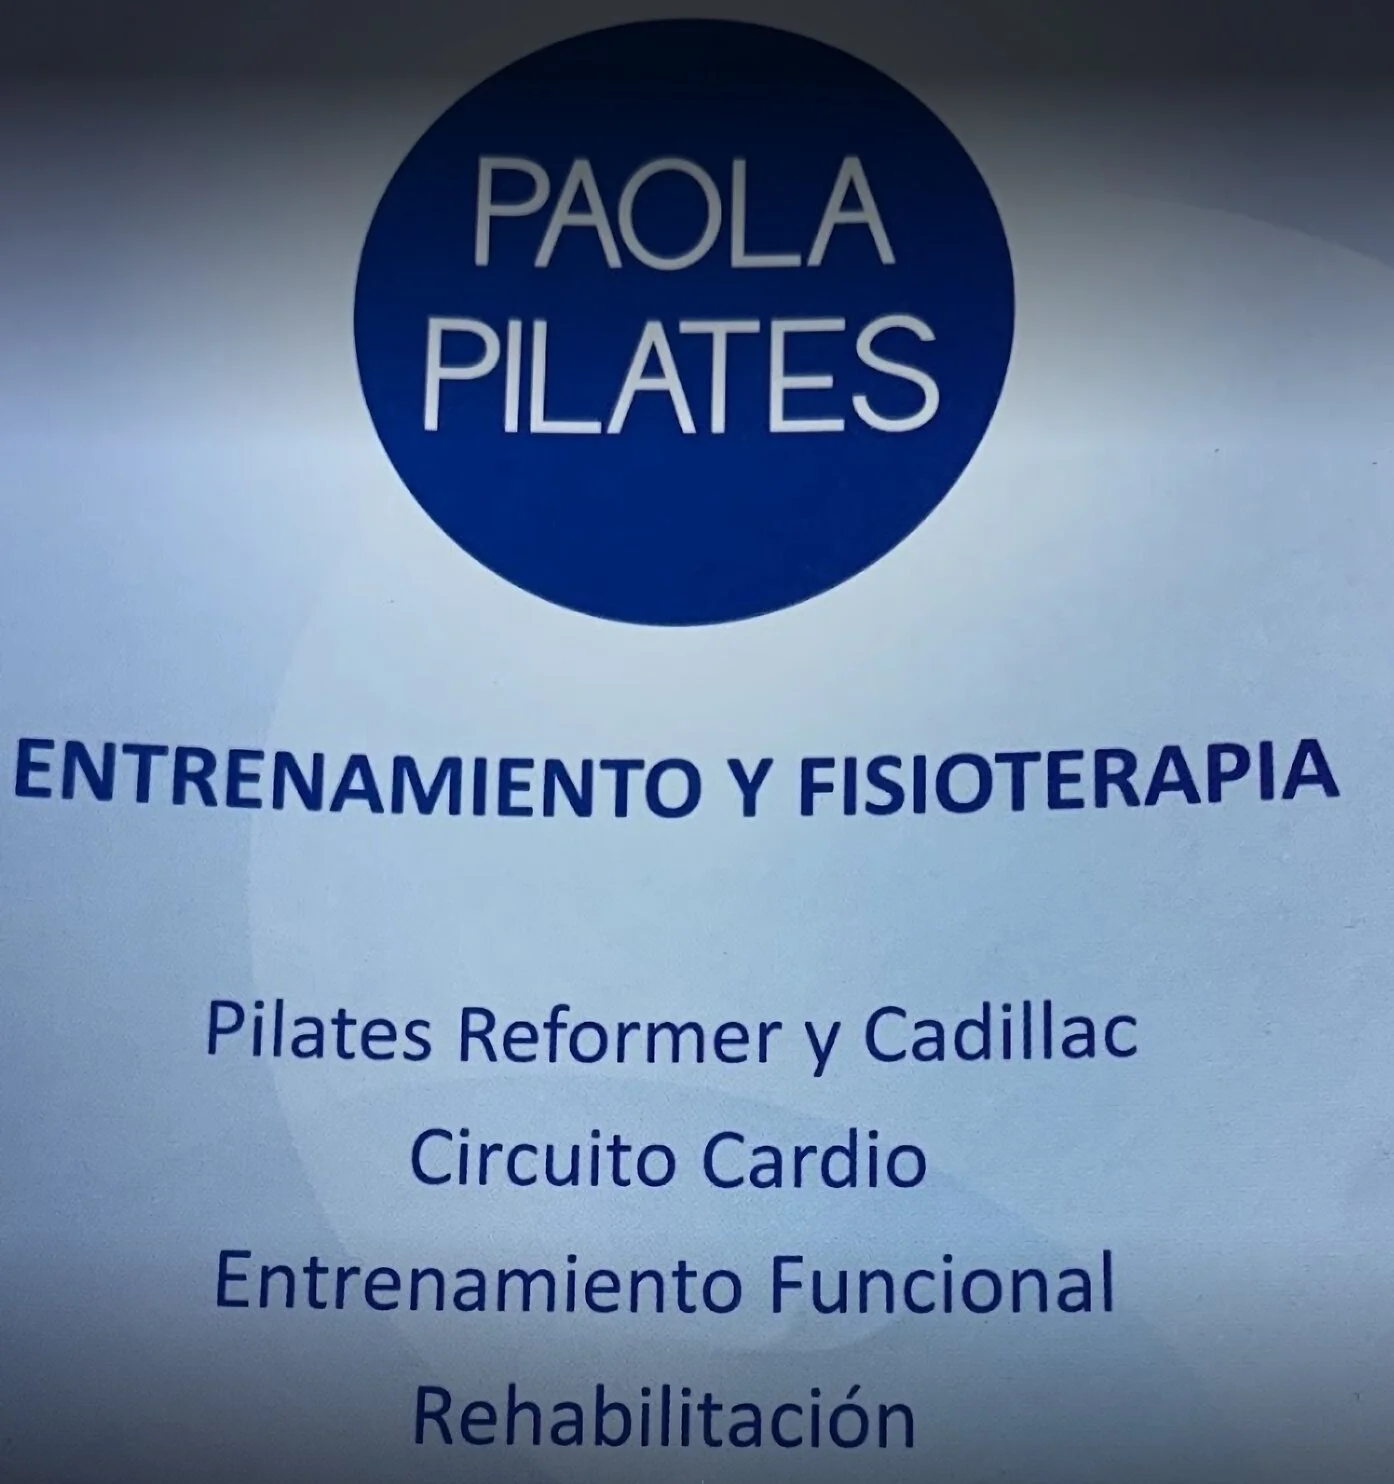 Pilates-paola-pilates-5268